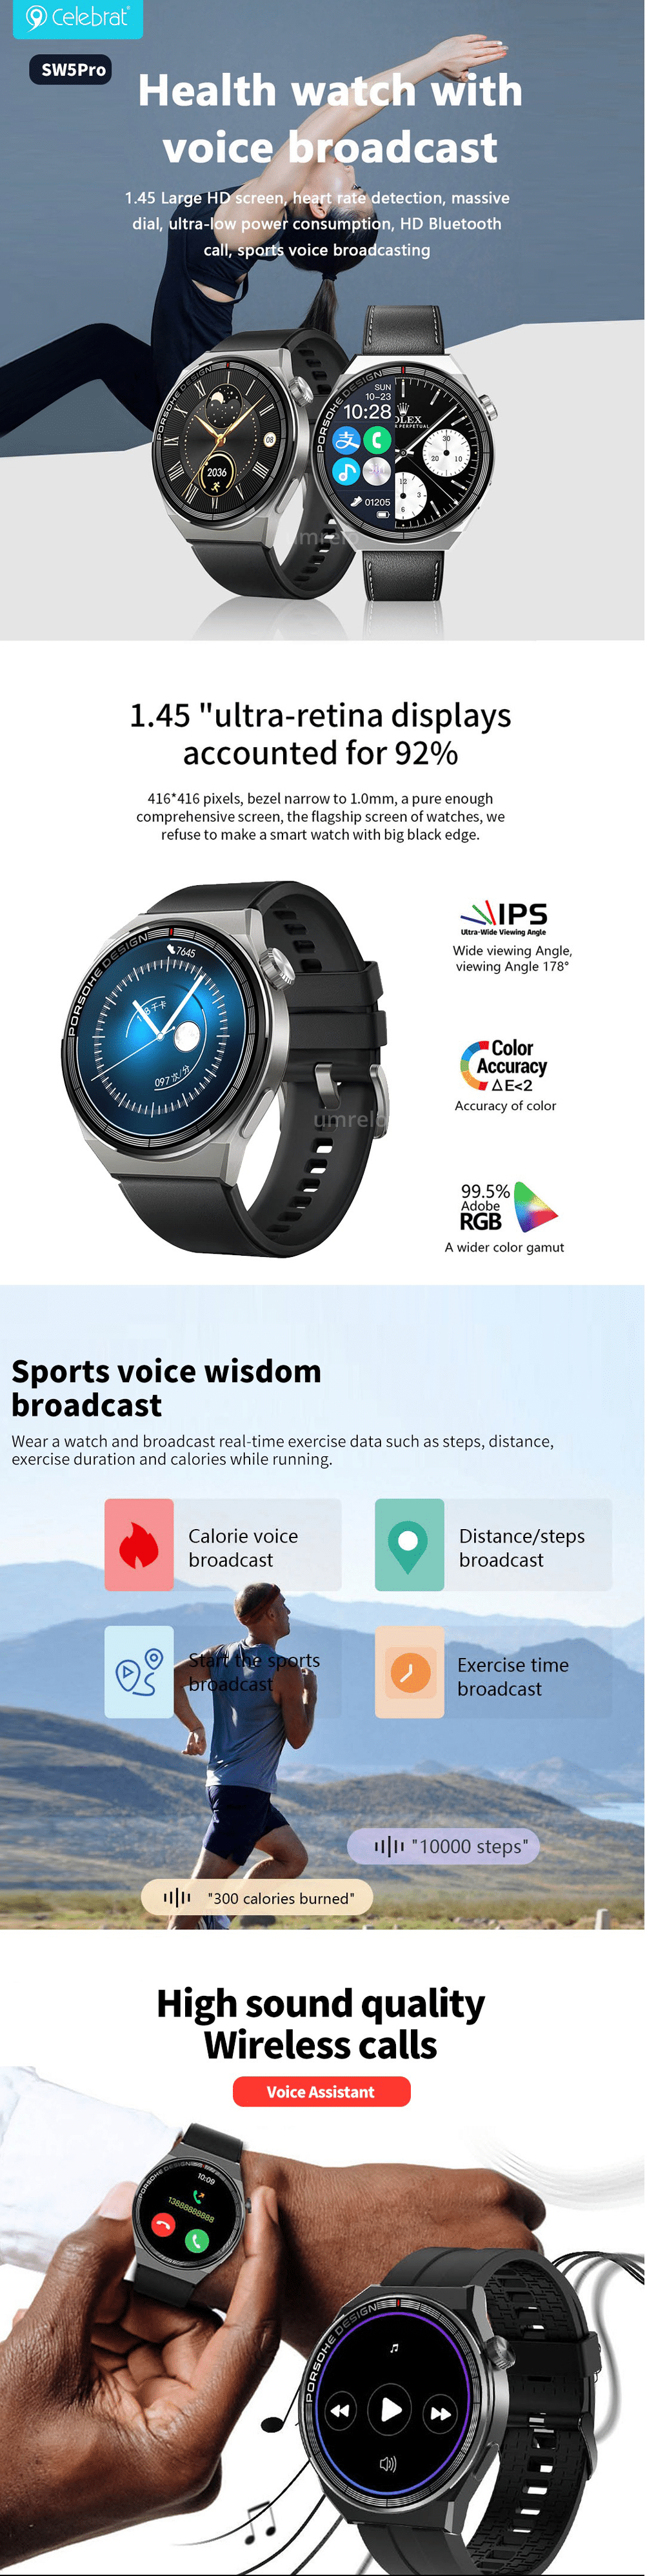 Yison Celebrat SW5PRO Bluetooth Calling Smart Watch 2